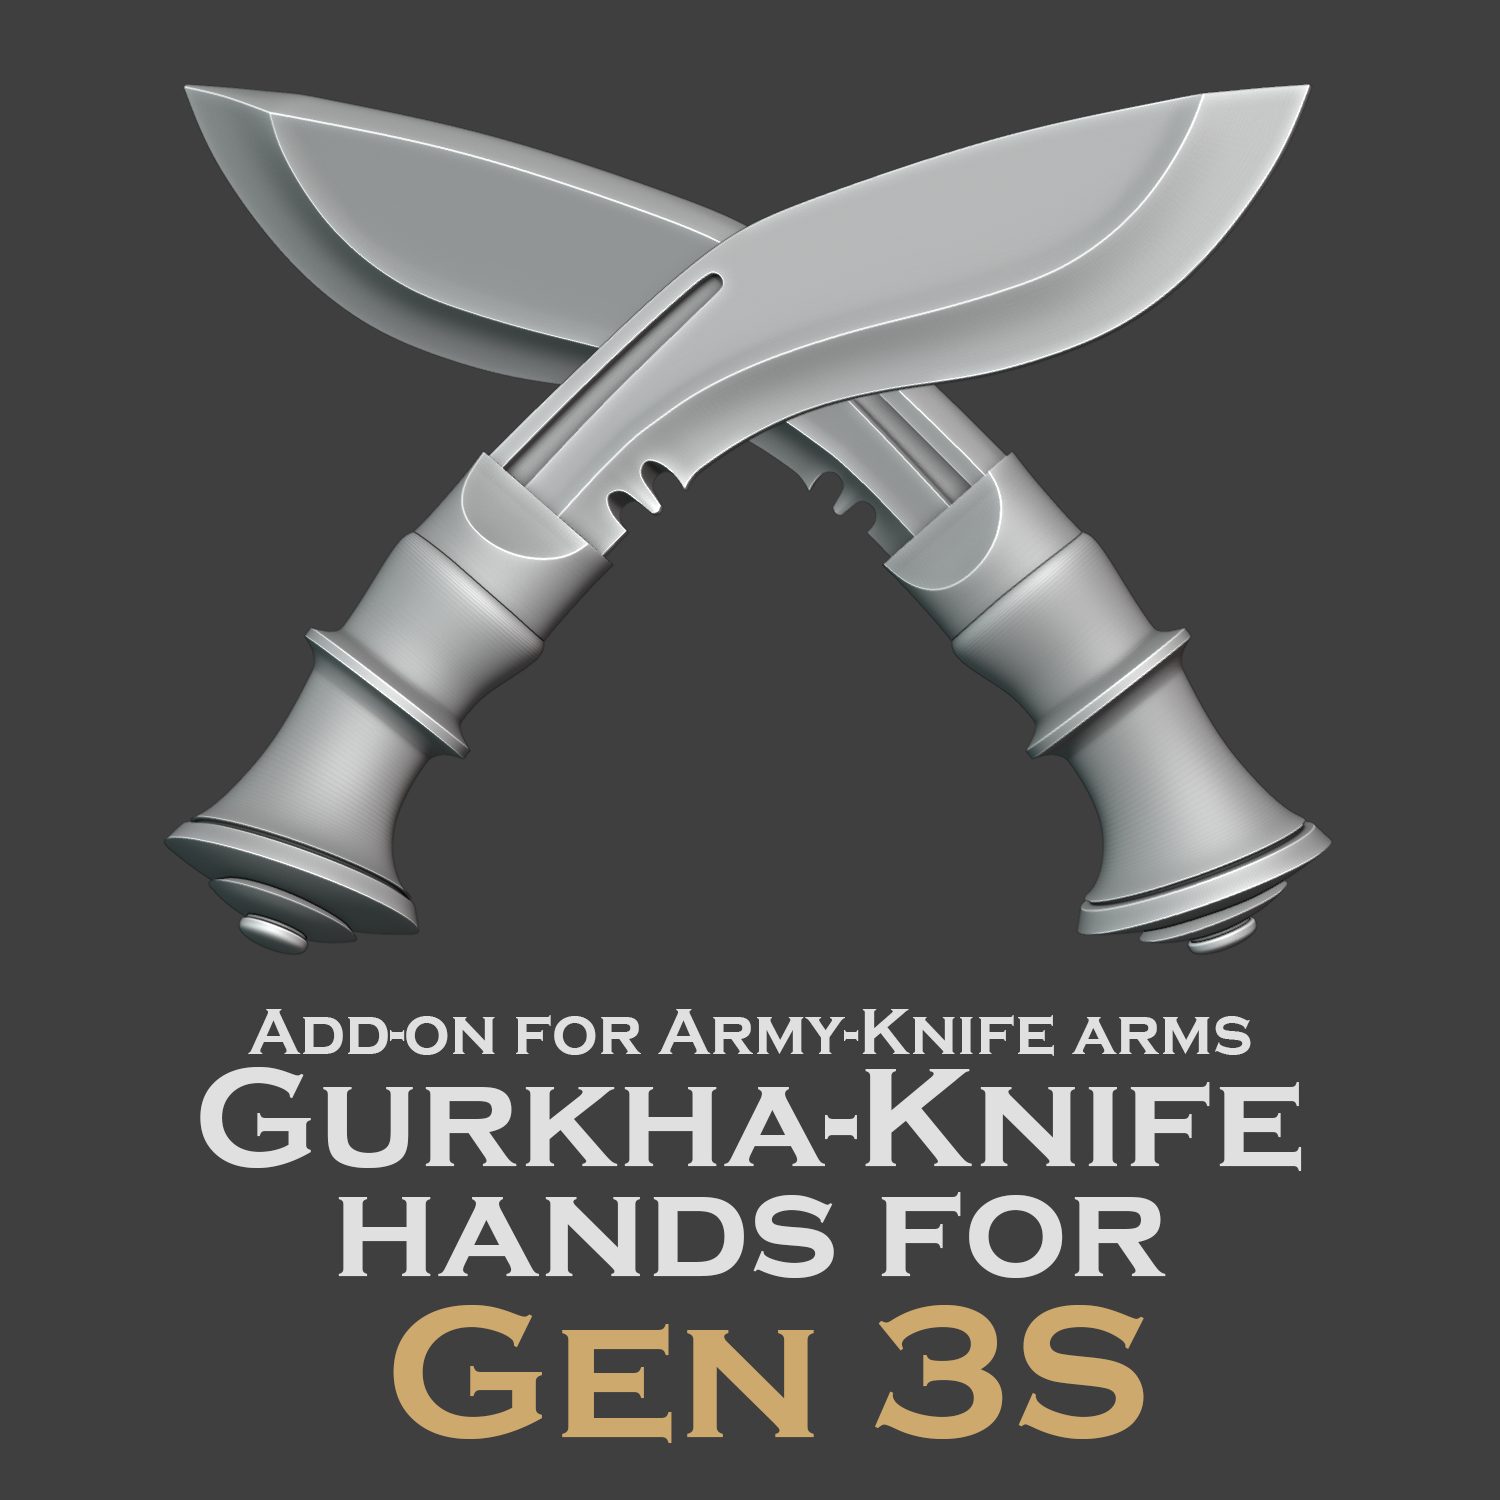 Heresy bits, M3 Gurkha knife hands